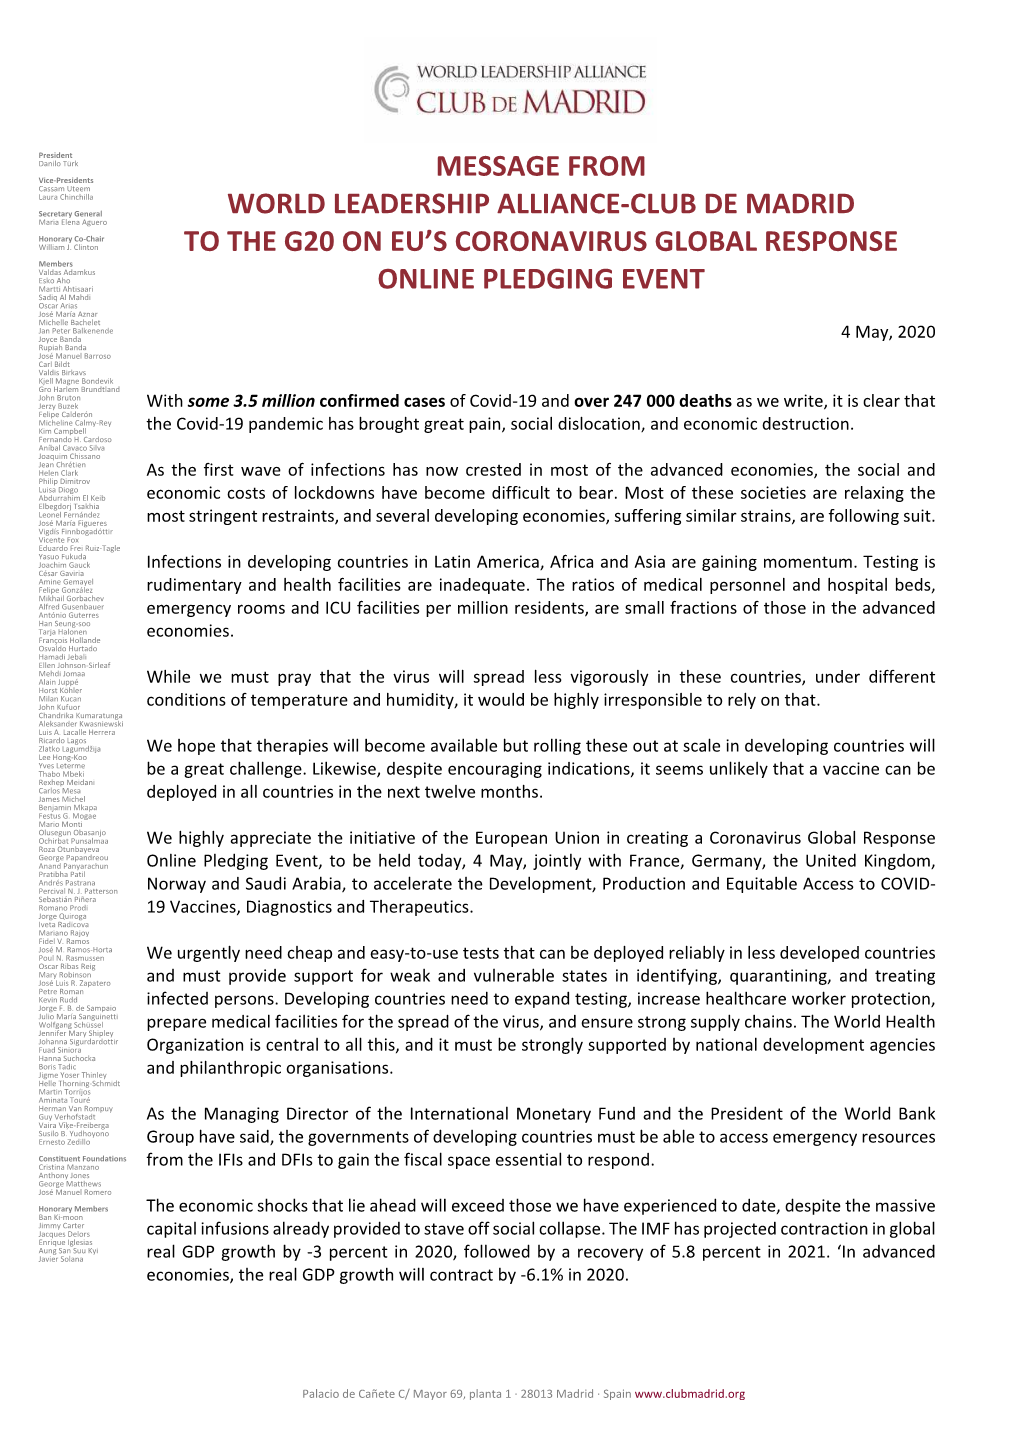 Message to the G20 on EU's Coronavirus Global Response